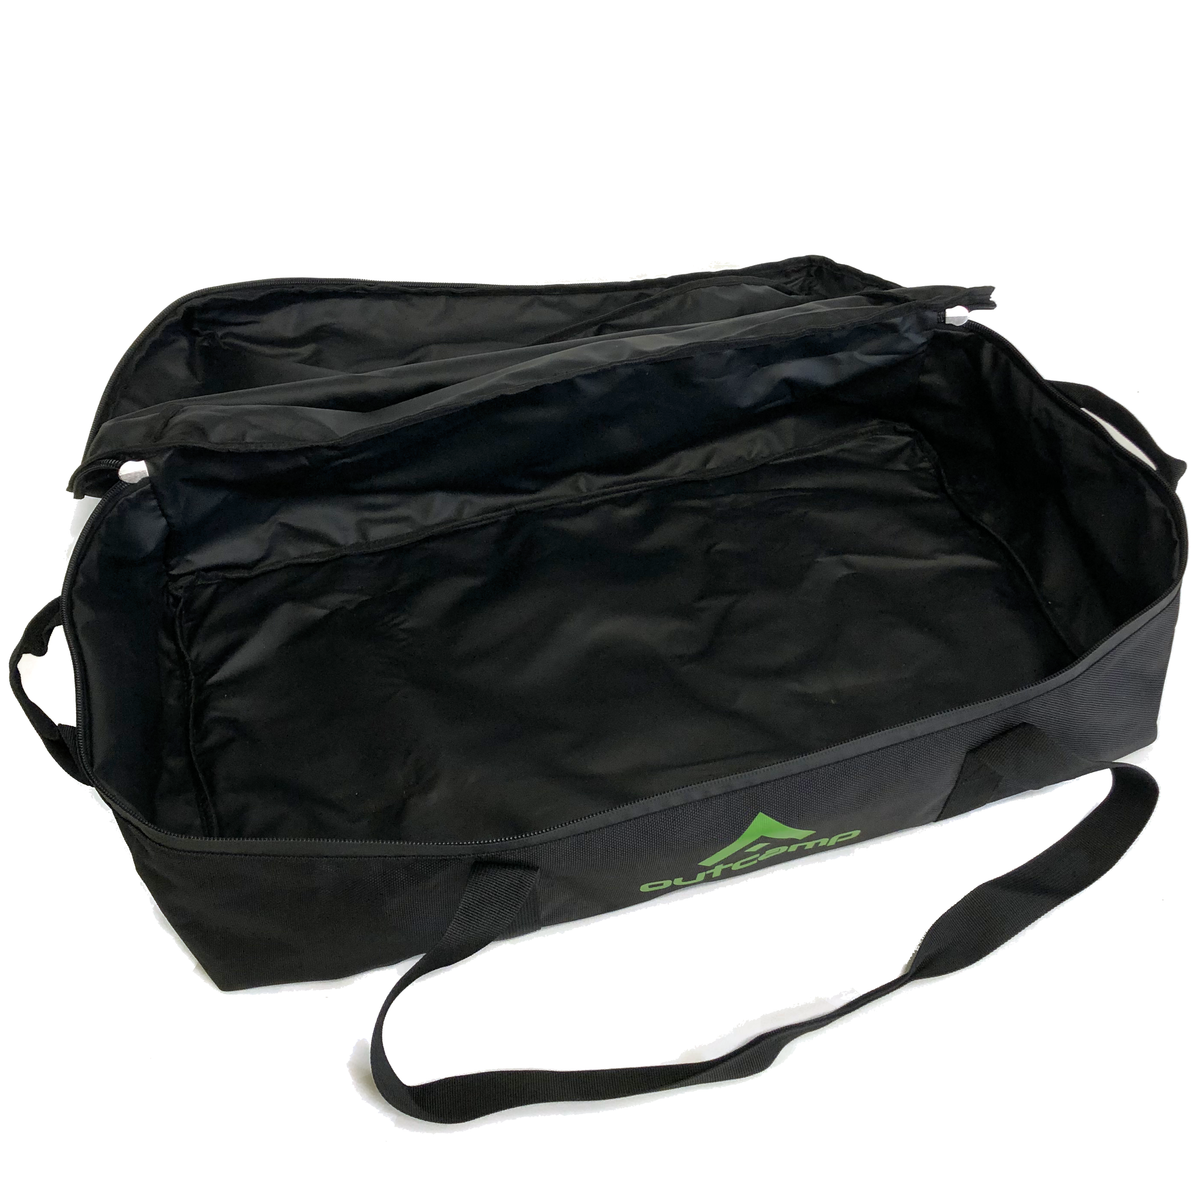 Weber BBQ duffel bag for caravan travel